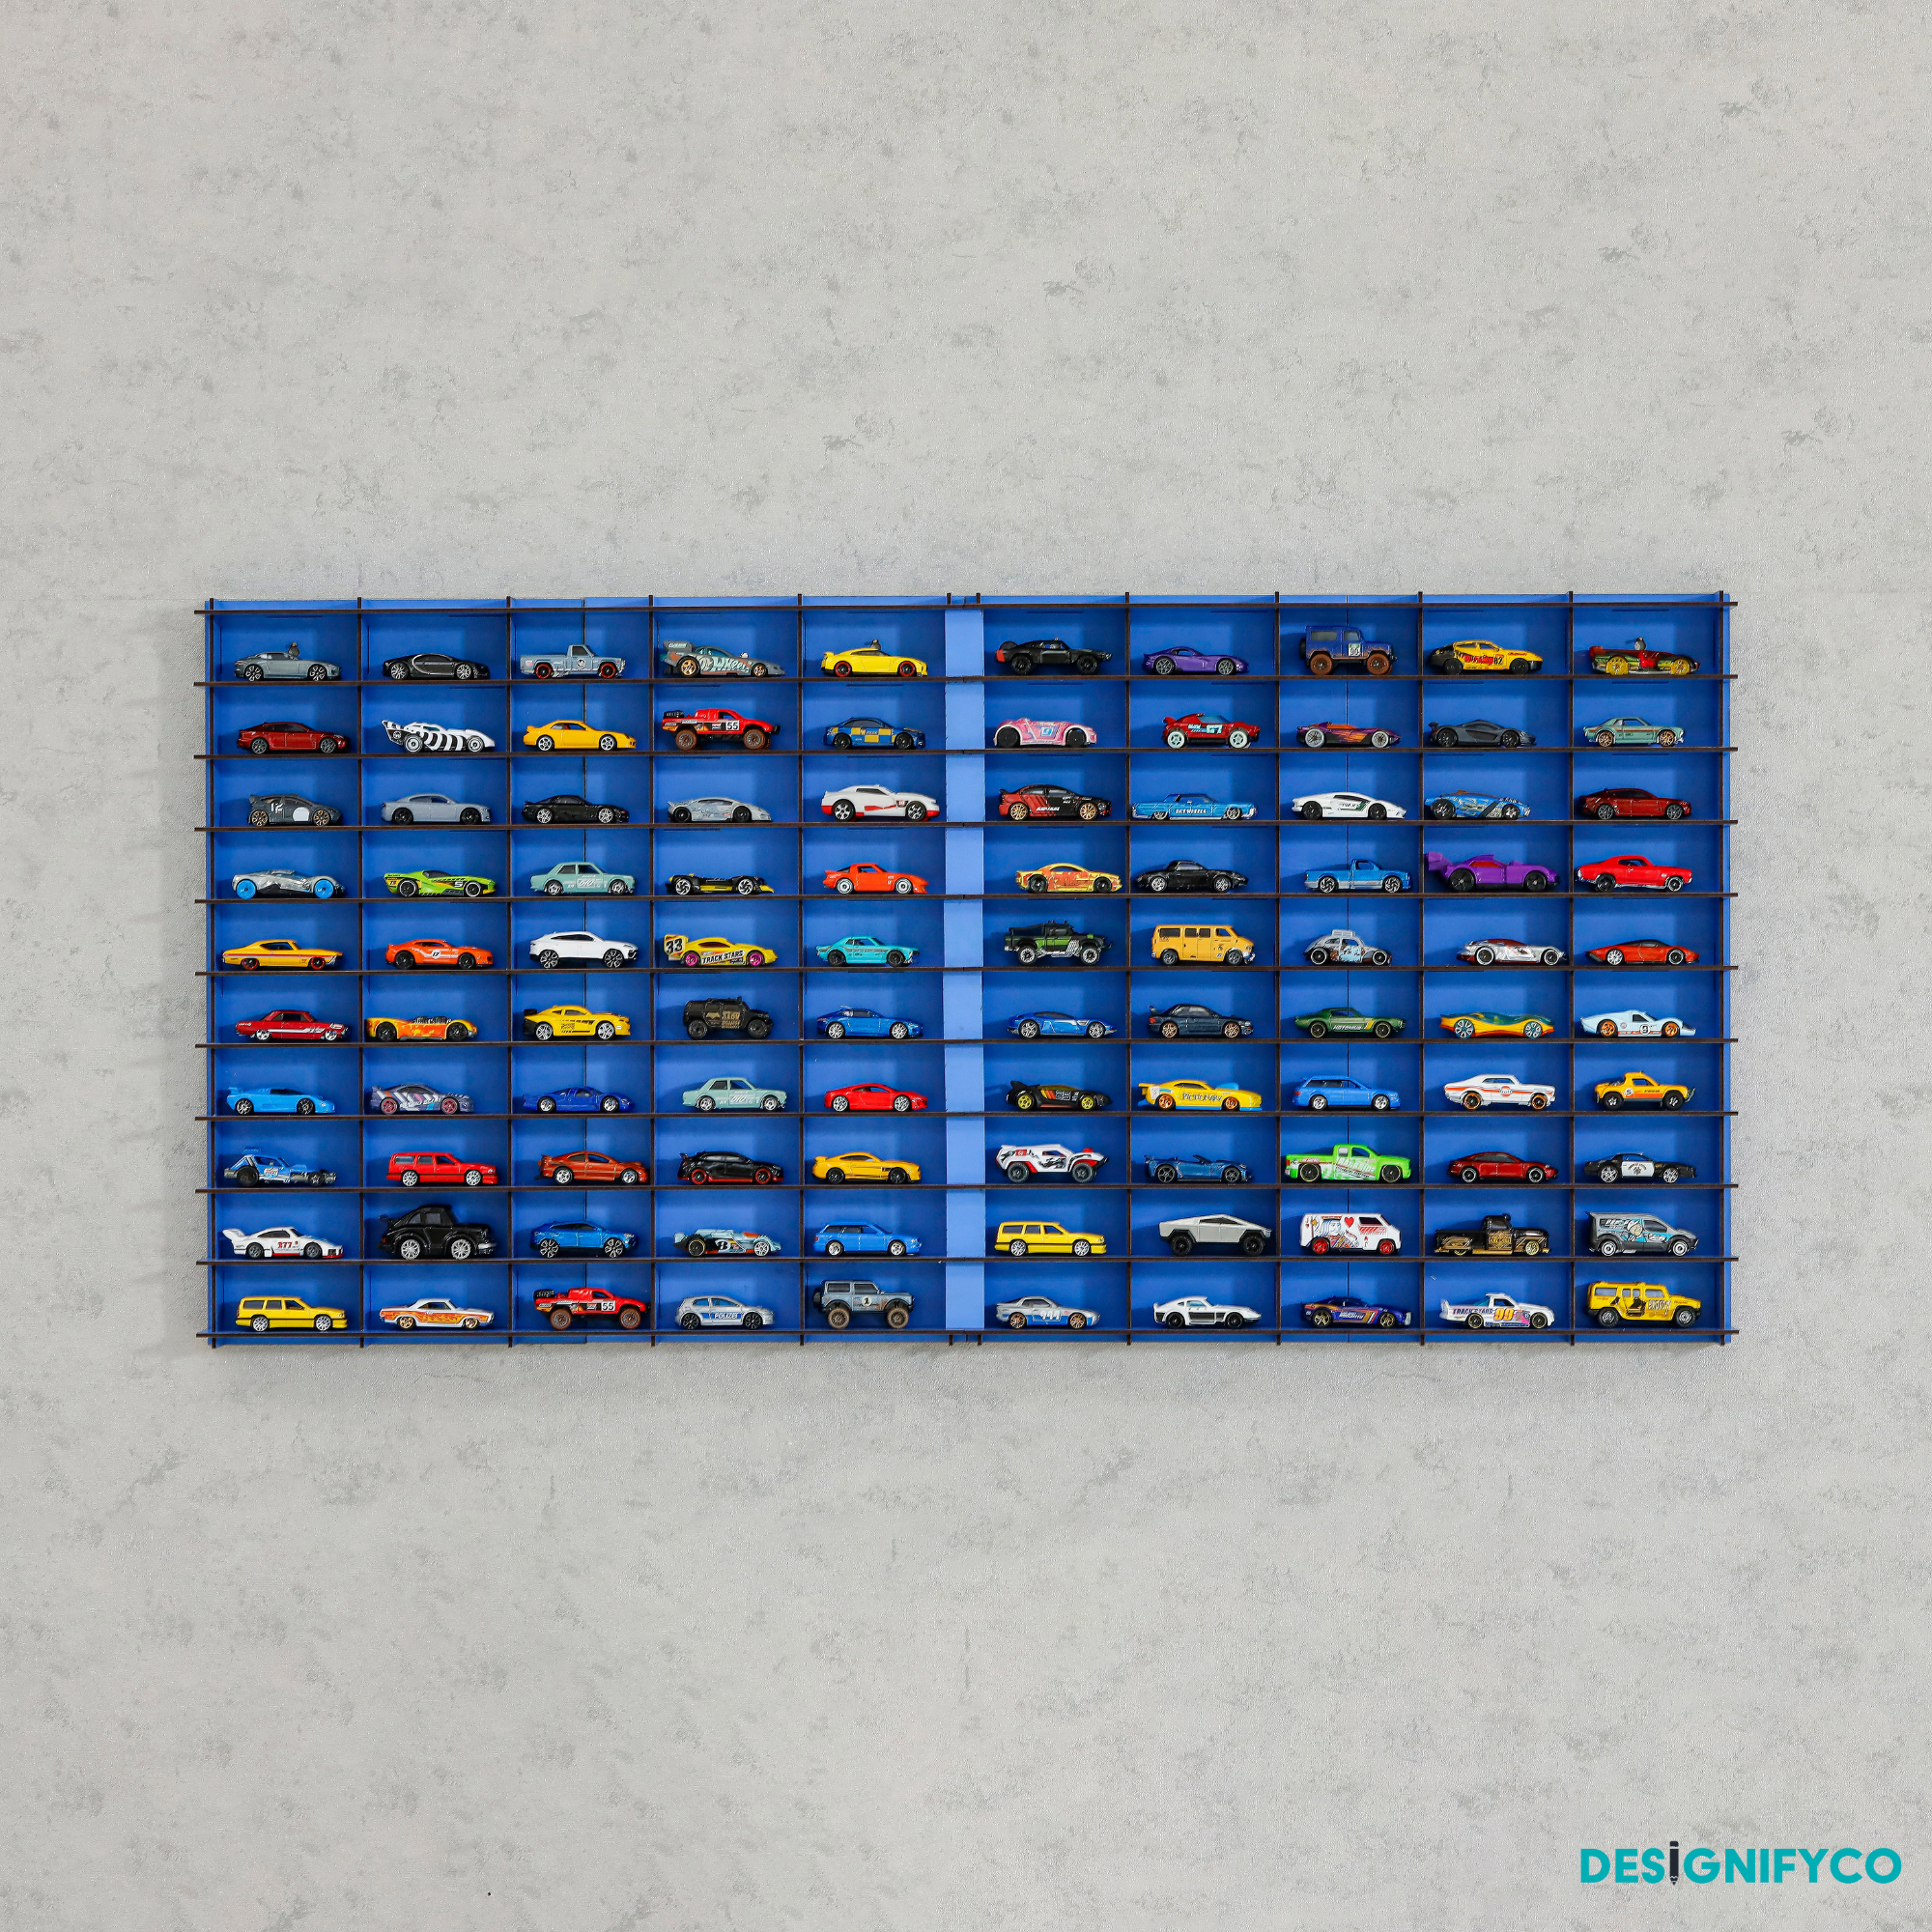 BLUE Toy Car Display Case